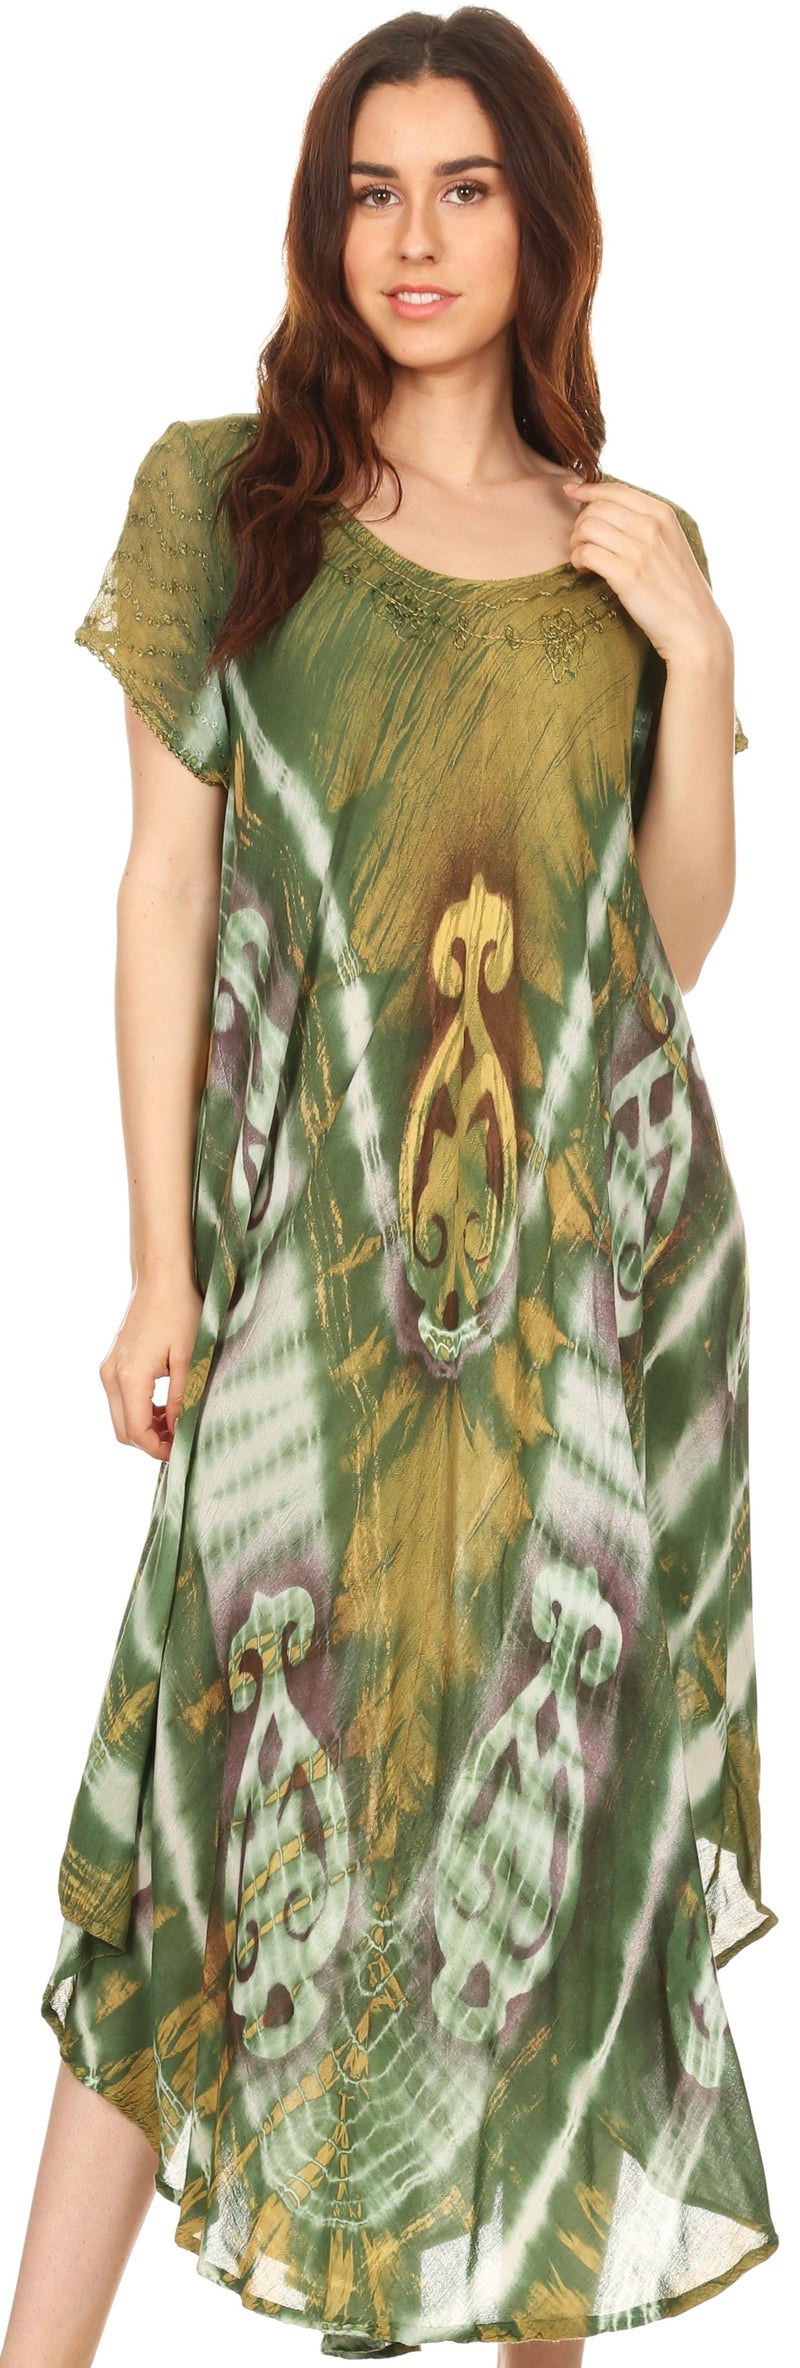 Sakkas Rachelle Short Sleeve Embroidered Batik Dress